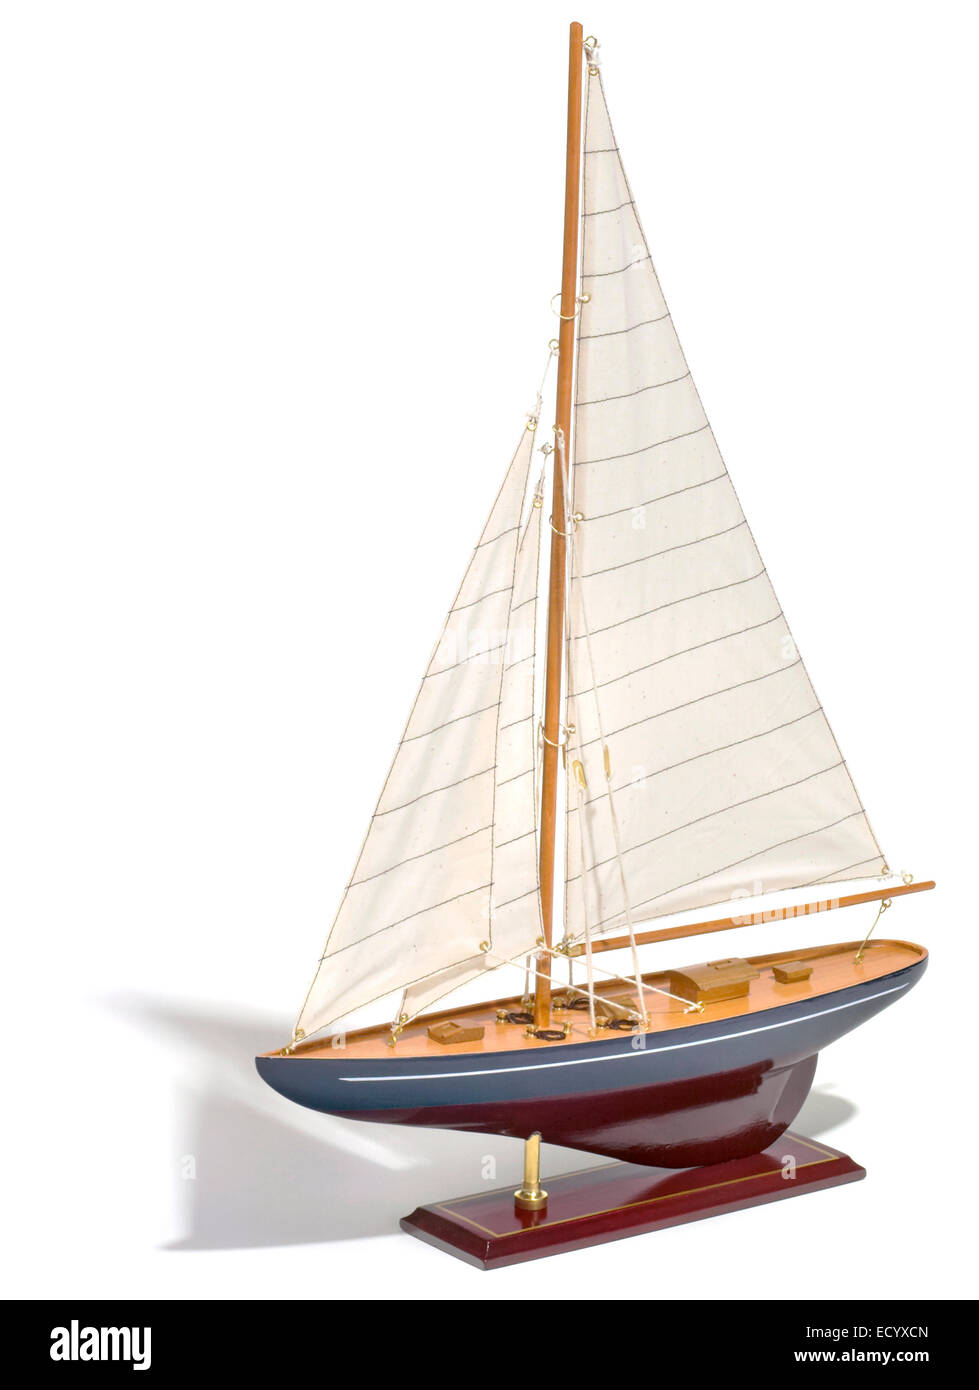 cherry wood model sailboat Stock Photo